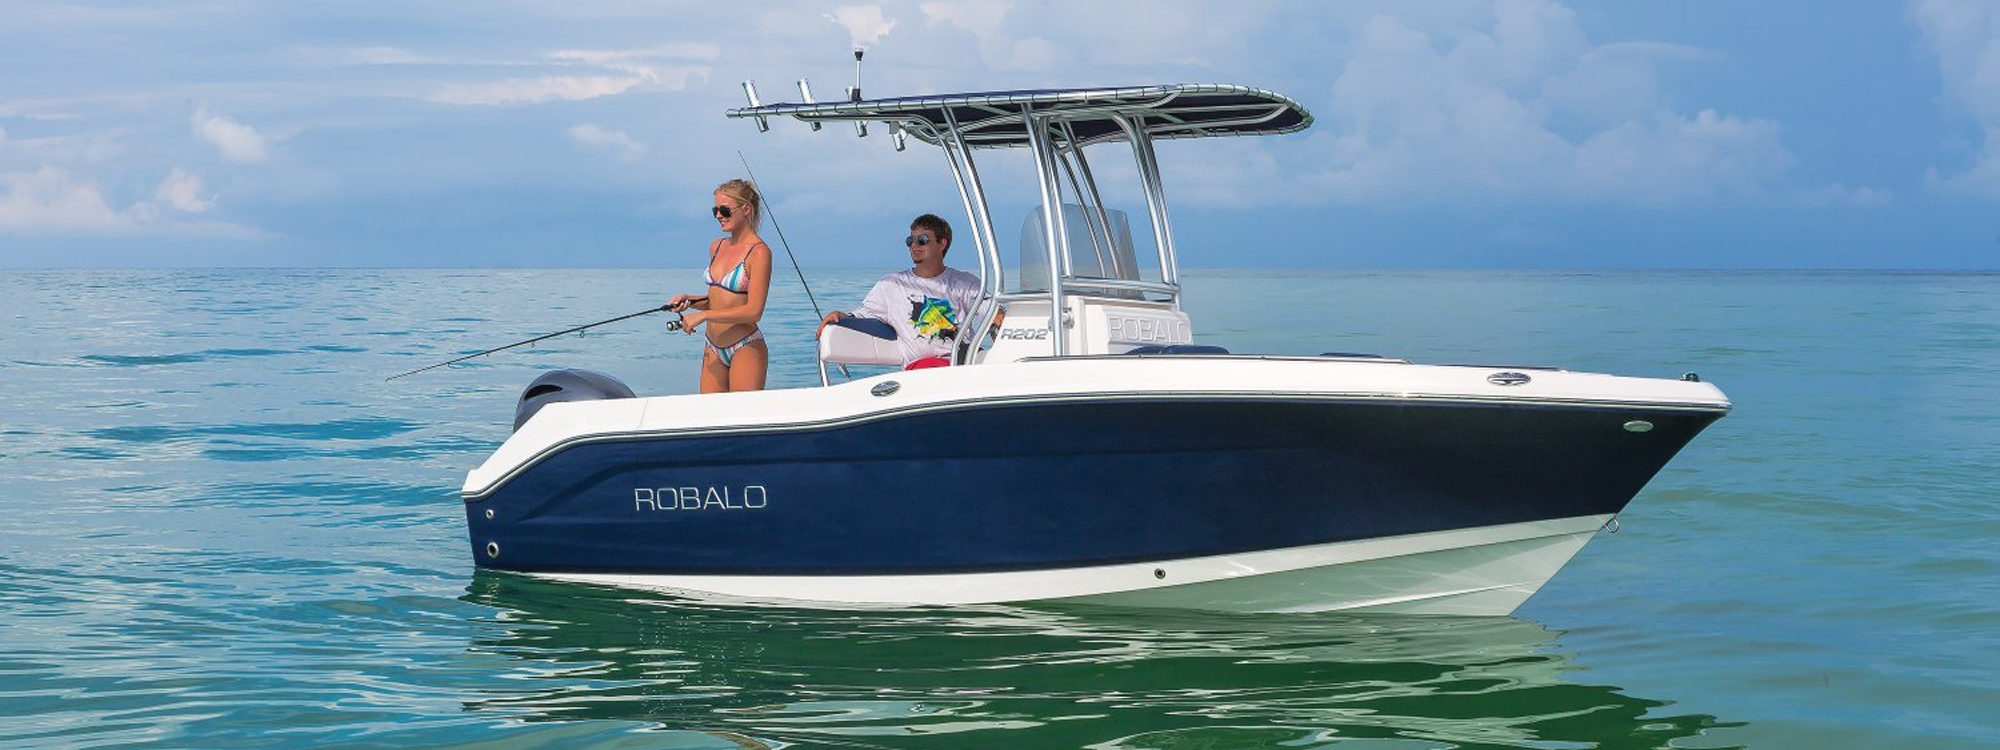 Robalo R202 Fishing Boat For Sale Michigan